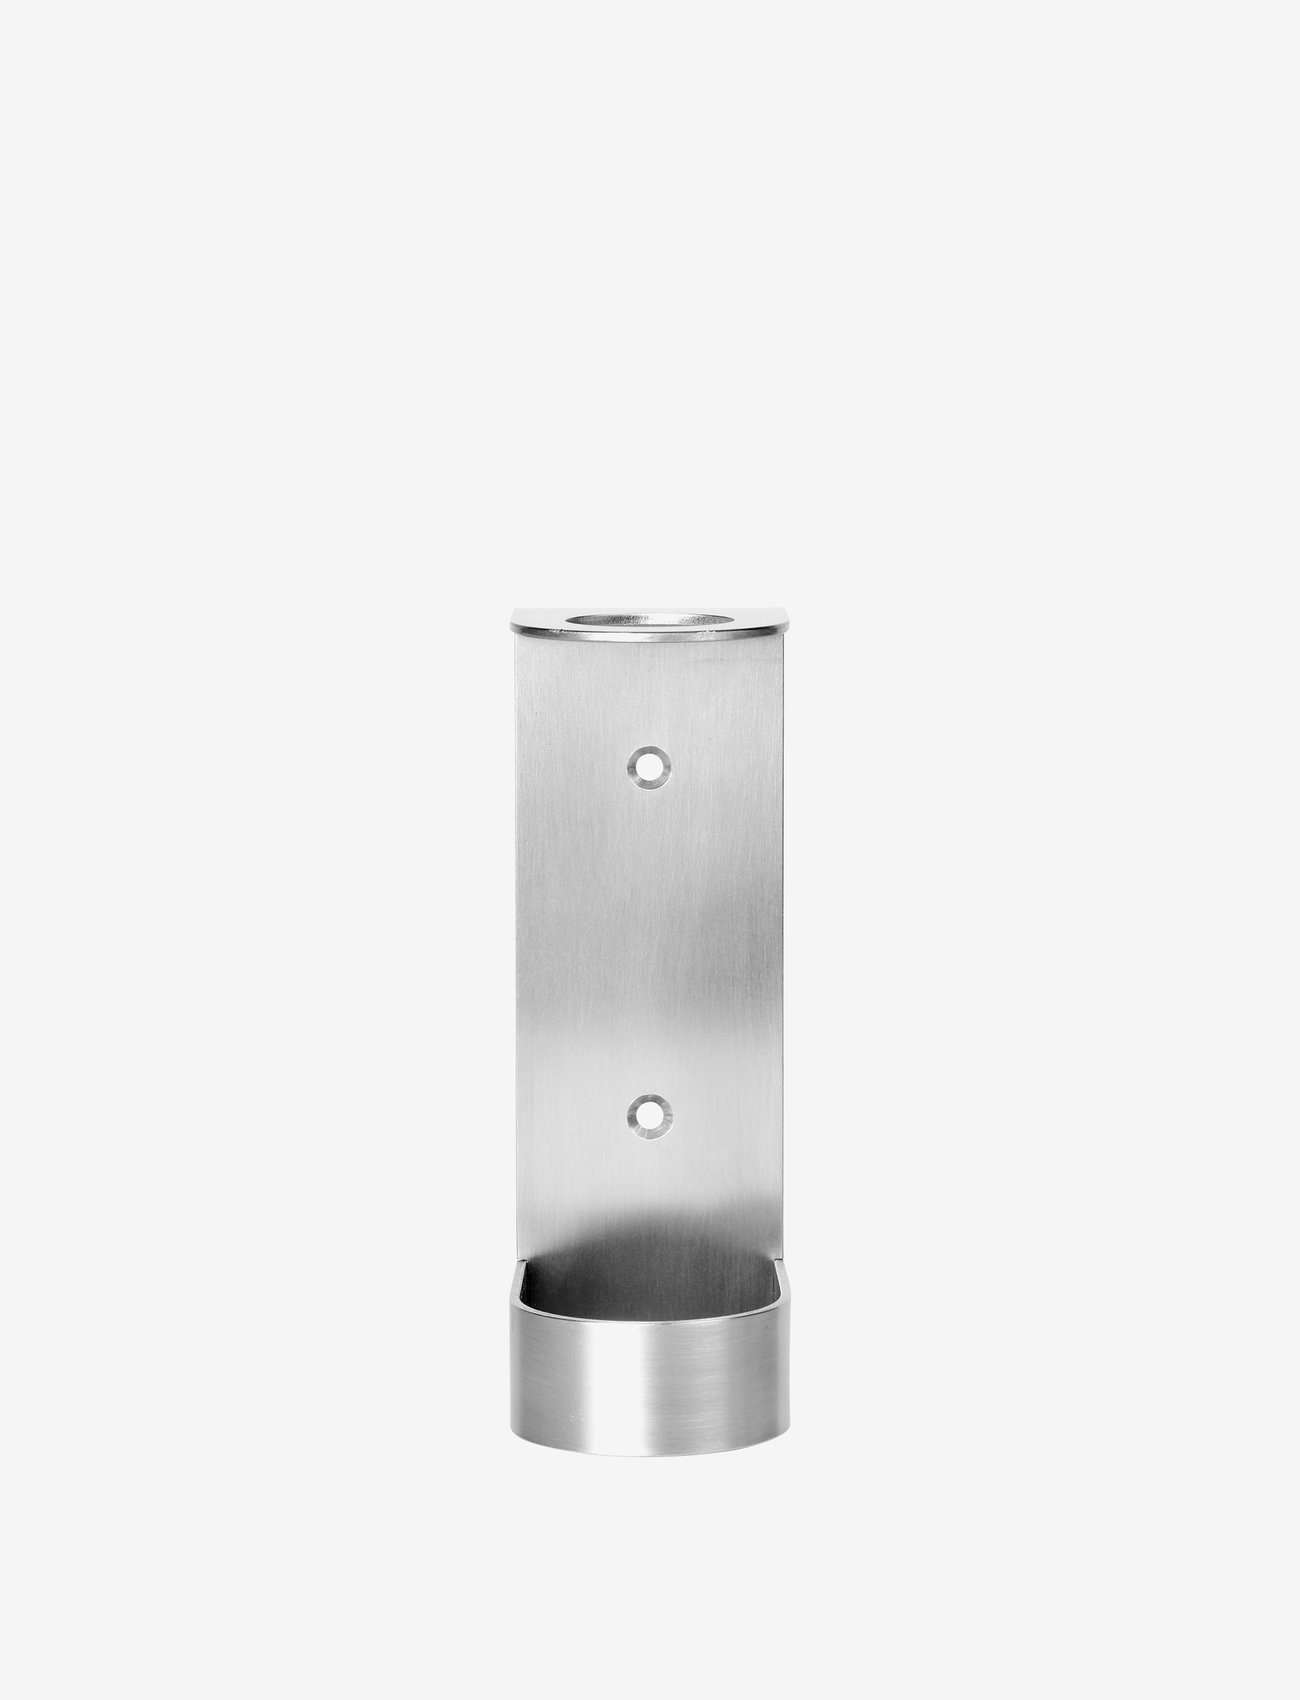 Kristina Dam Studio - Dowel Bottle Display - Hand Lotion - krokar & knoppar - stainless steel - 0